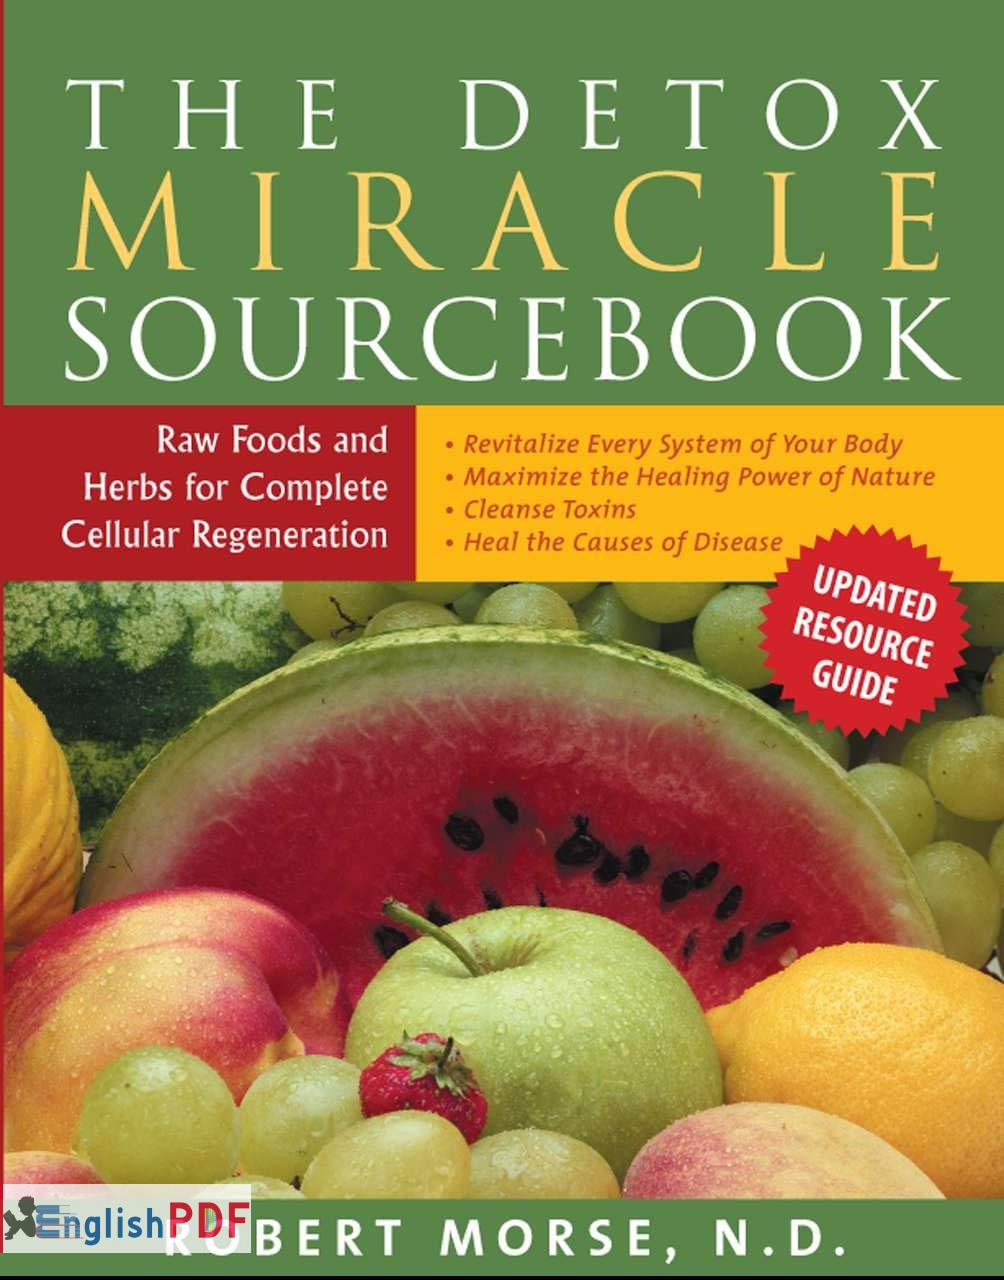 The Detox Miracle Sourcebook PDF EnglishPDF